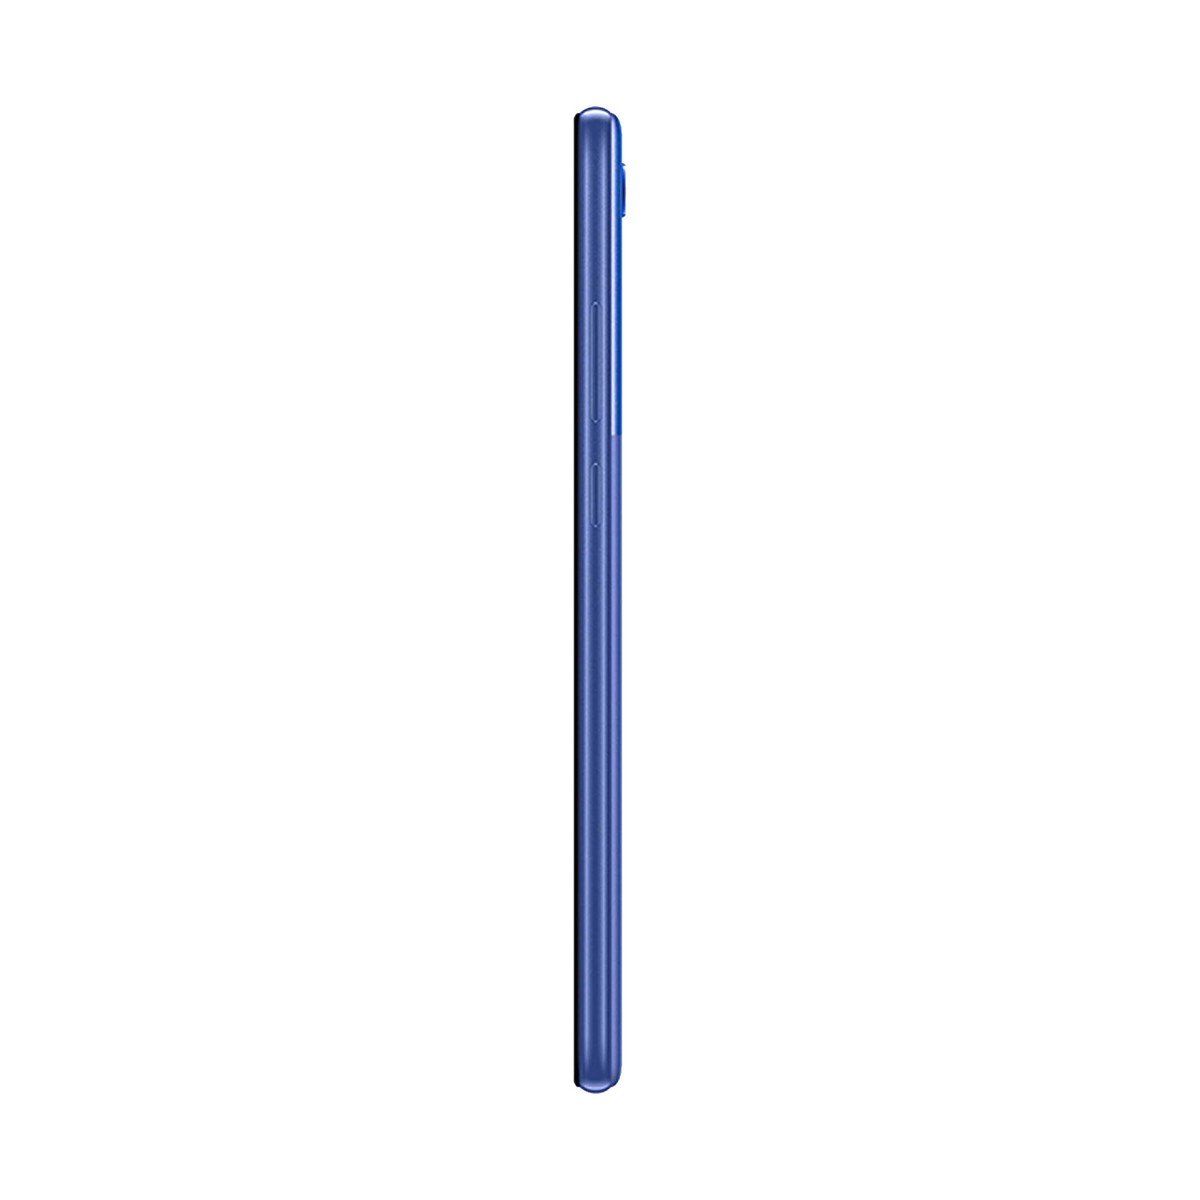 Huawei Y6S 64GB Orchid Blue